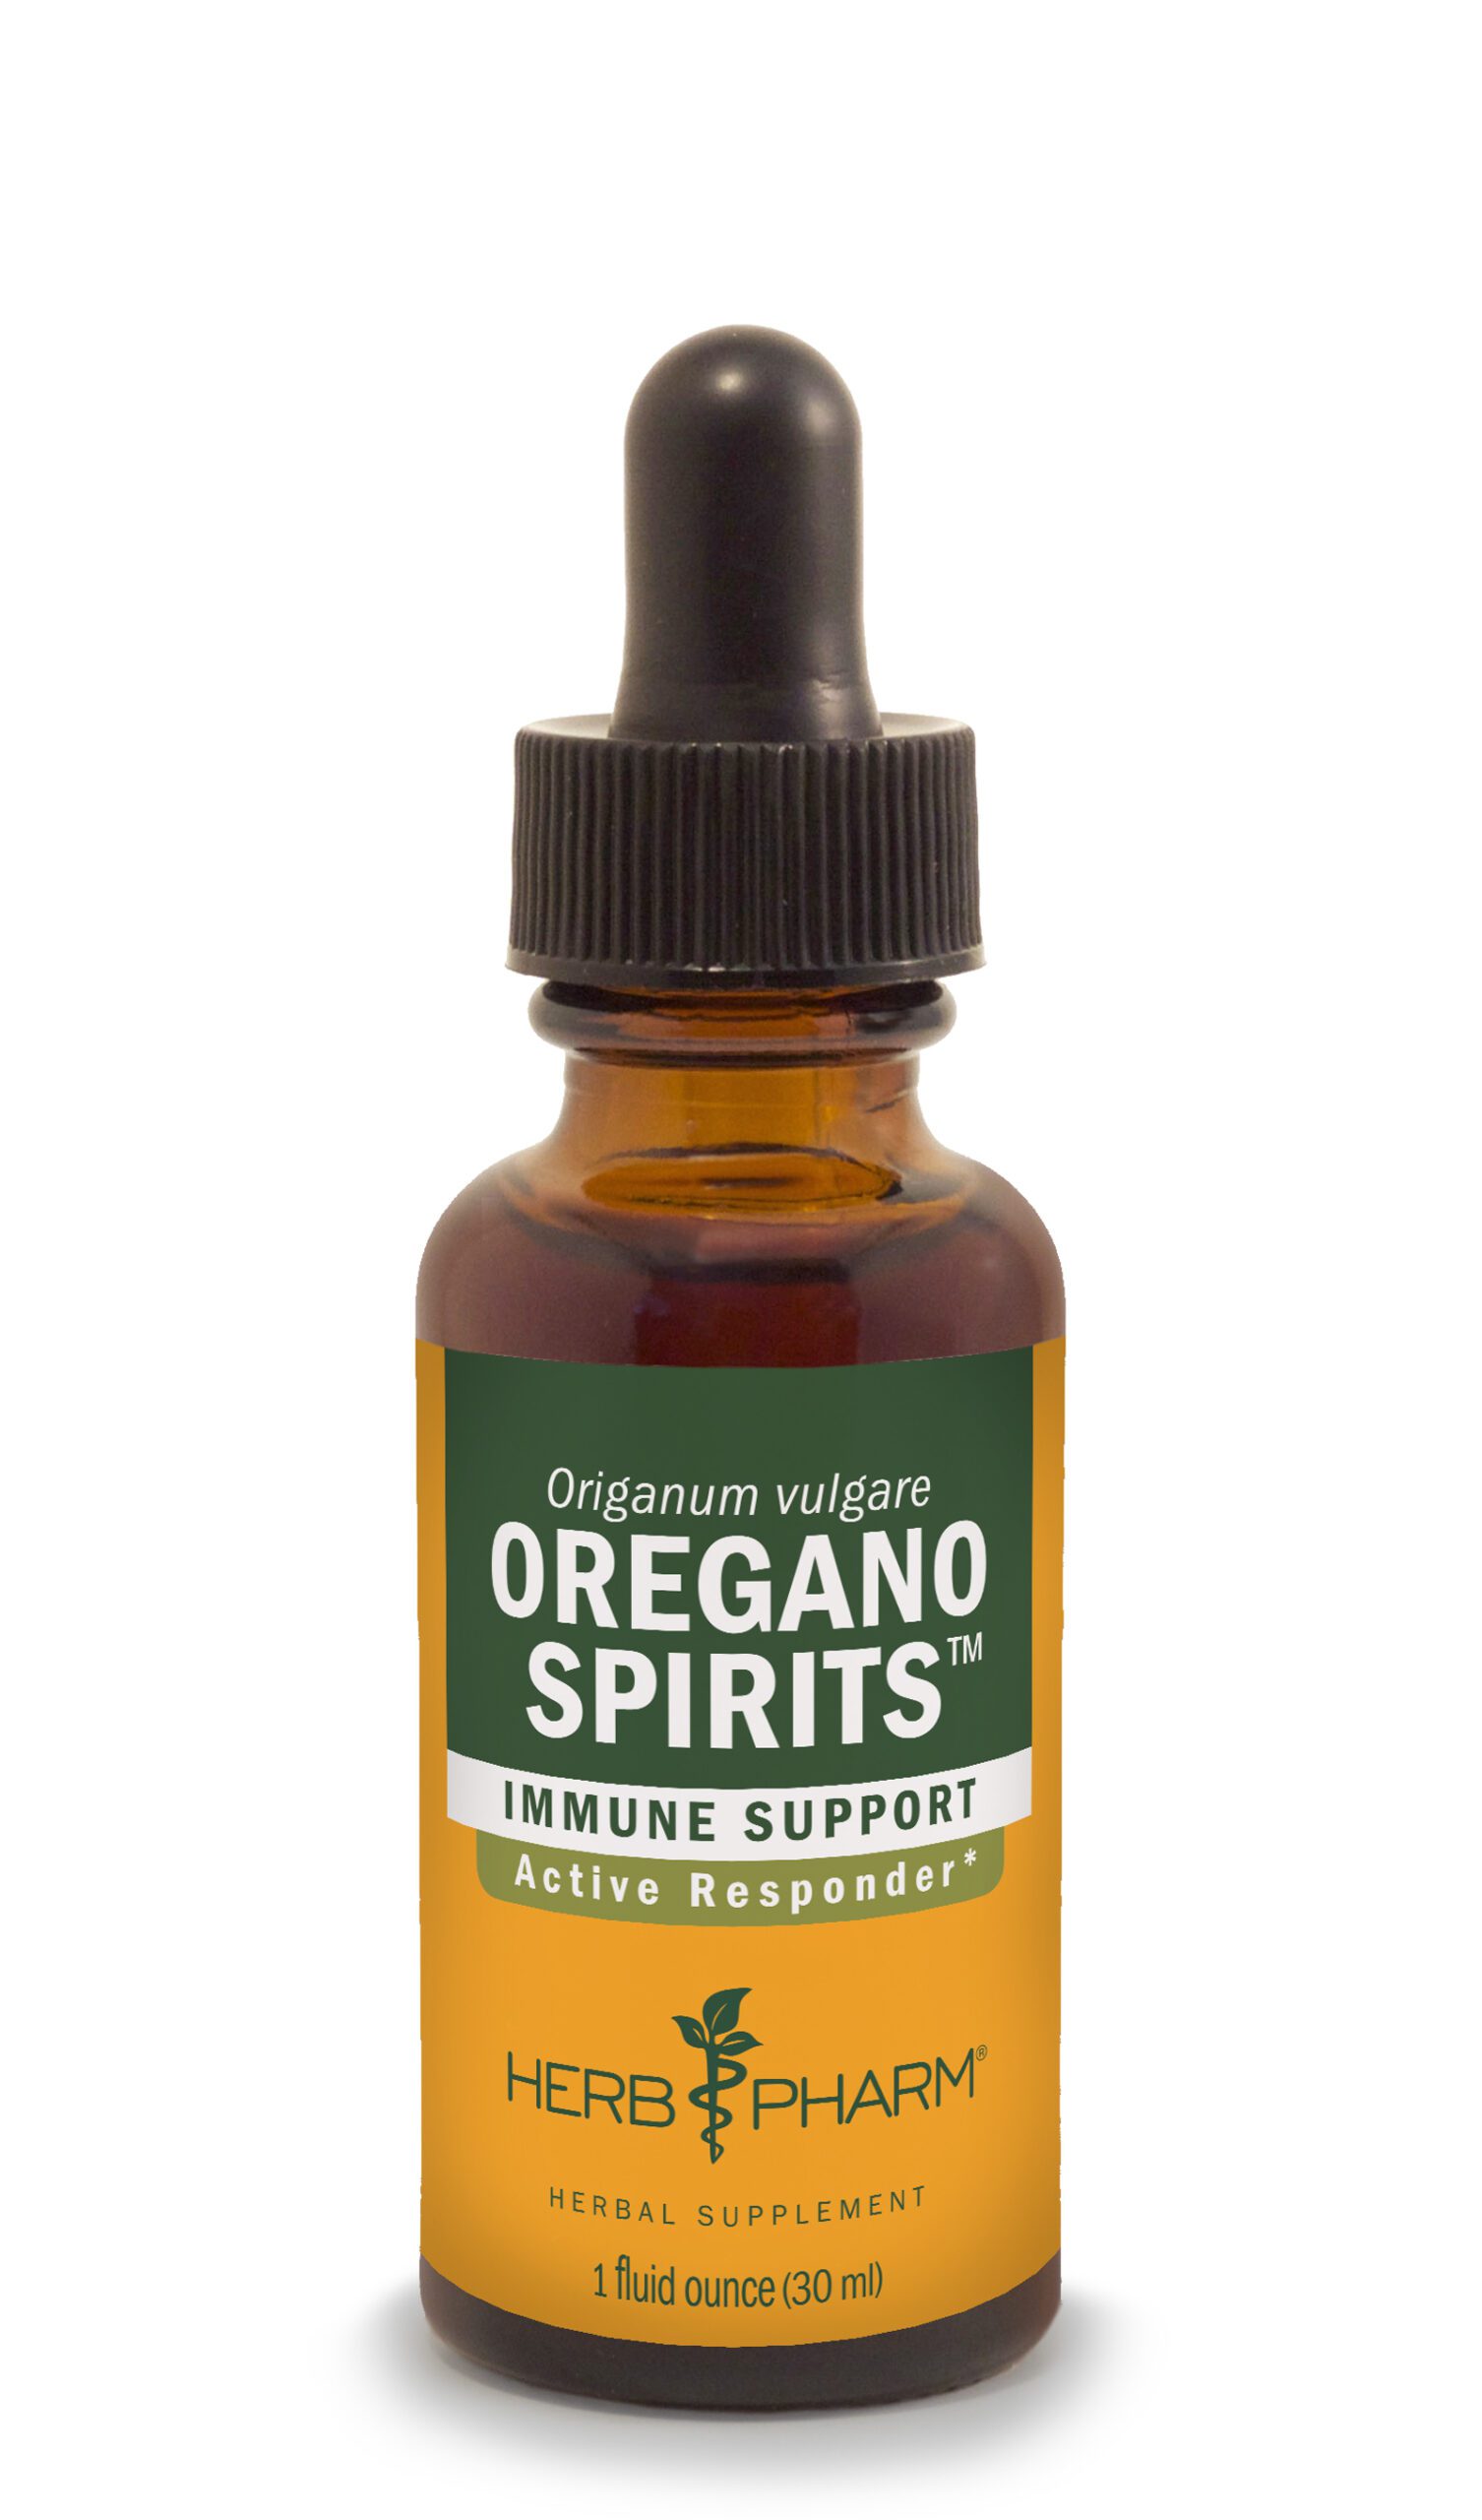 Product Listing Image for Herb Pharm Oregano Spirits 1oz